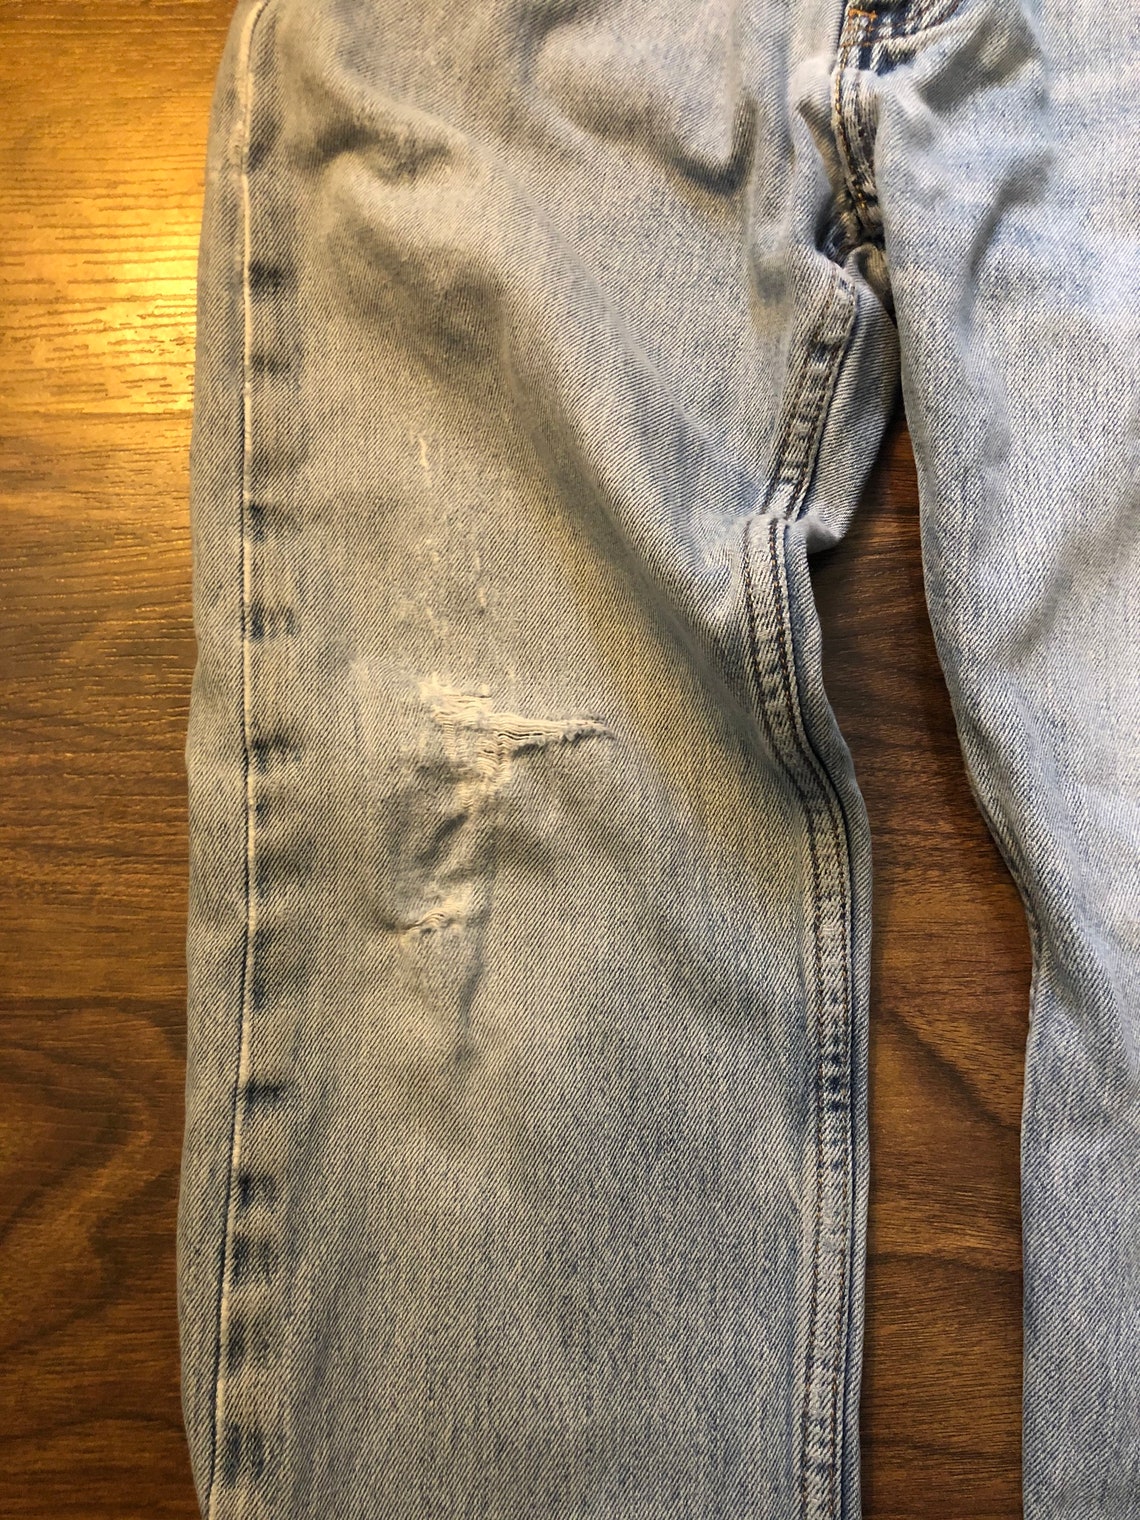 Vintage Levis Jeans Distressed Denim 505 Lot Red Tab | Etsy